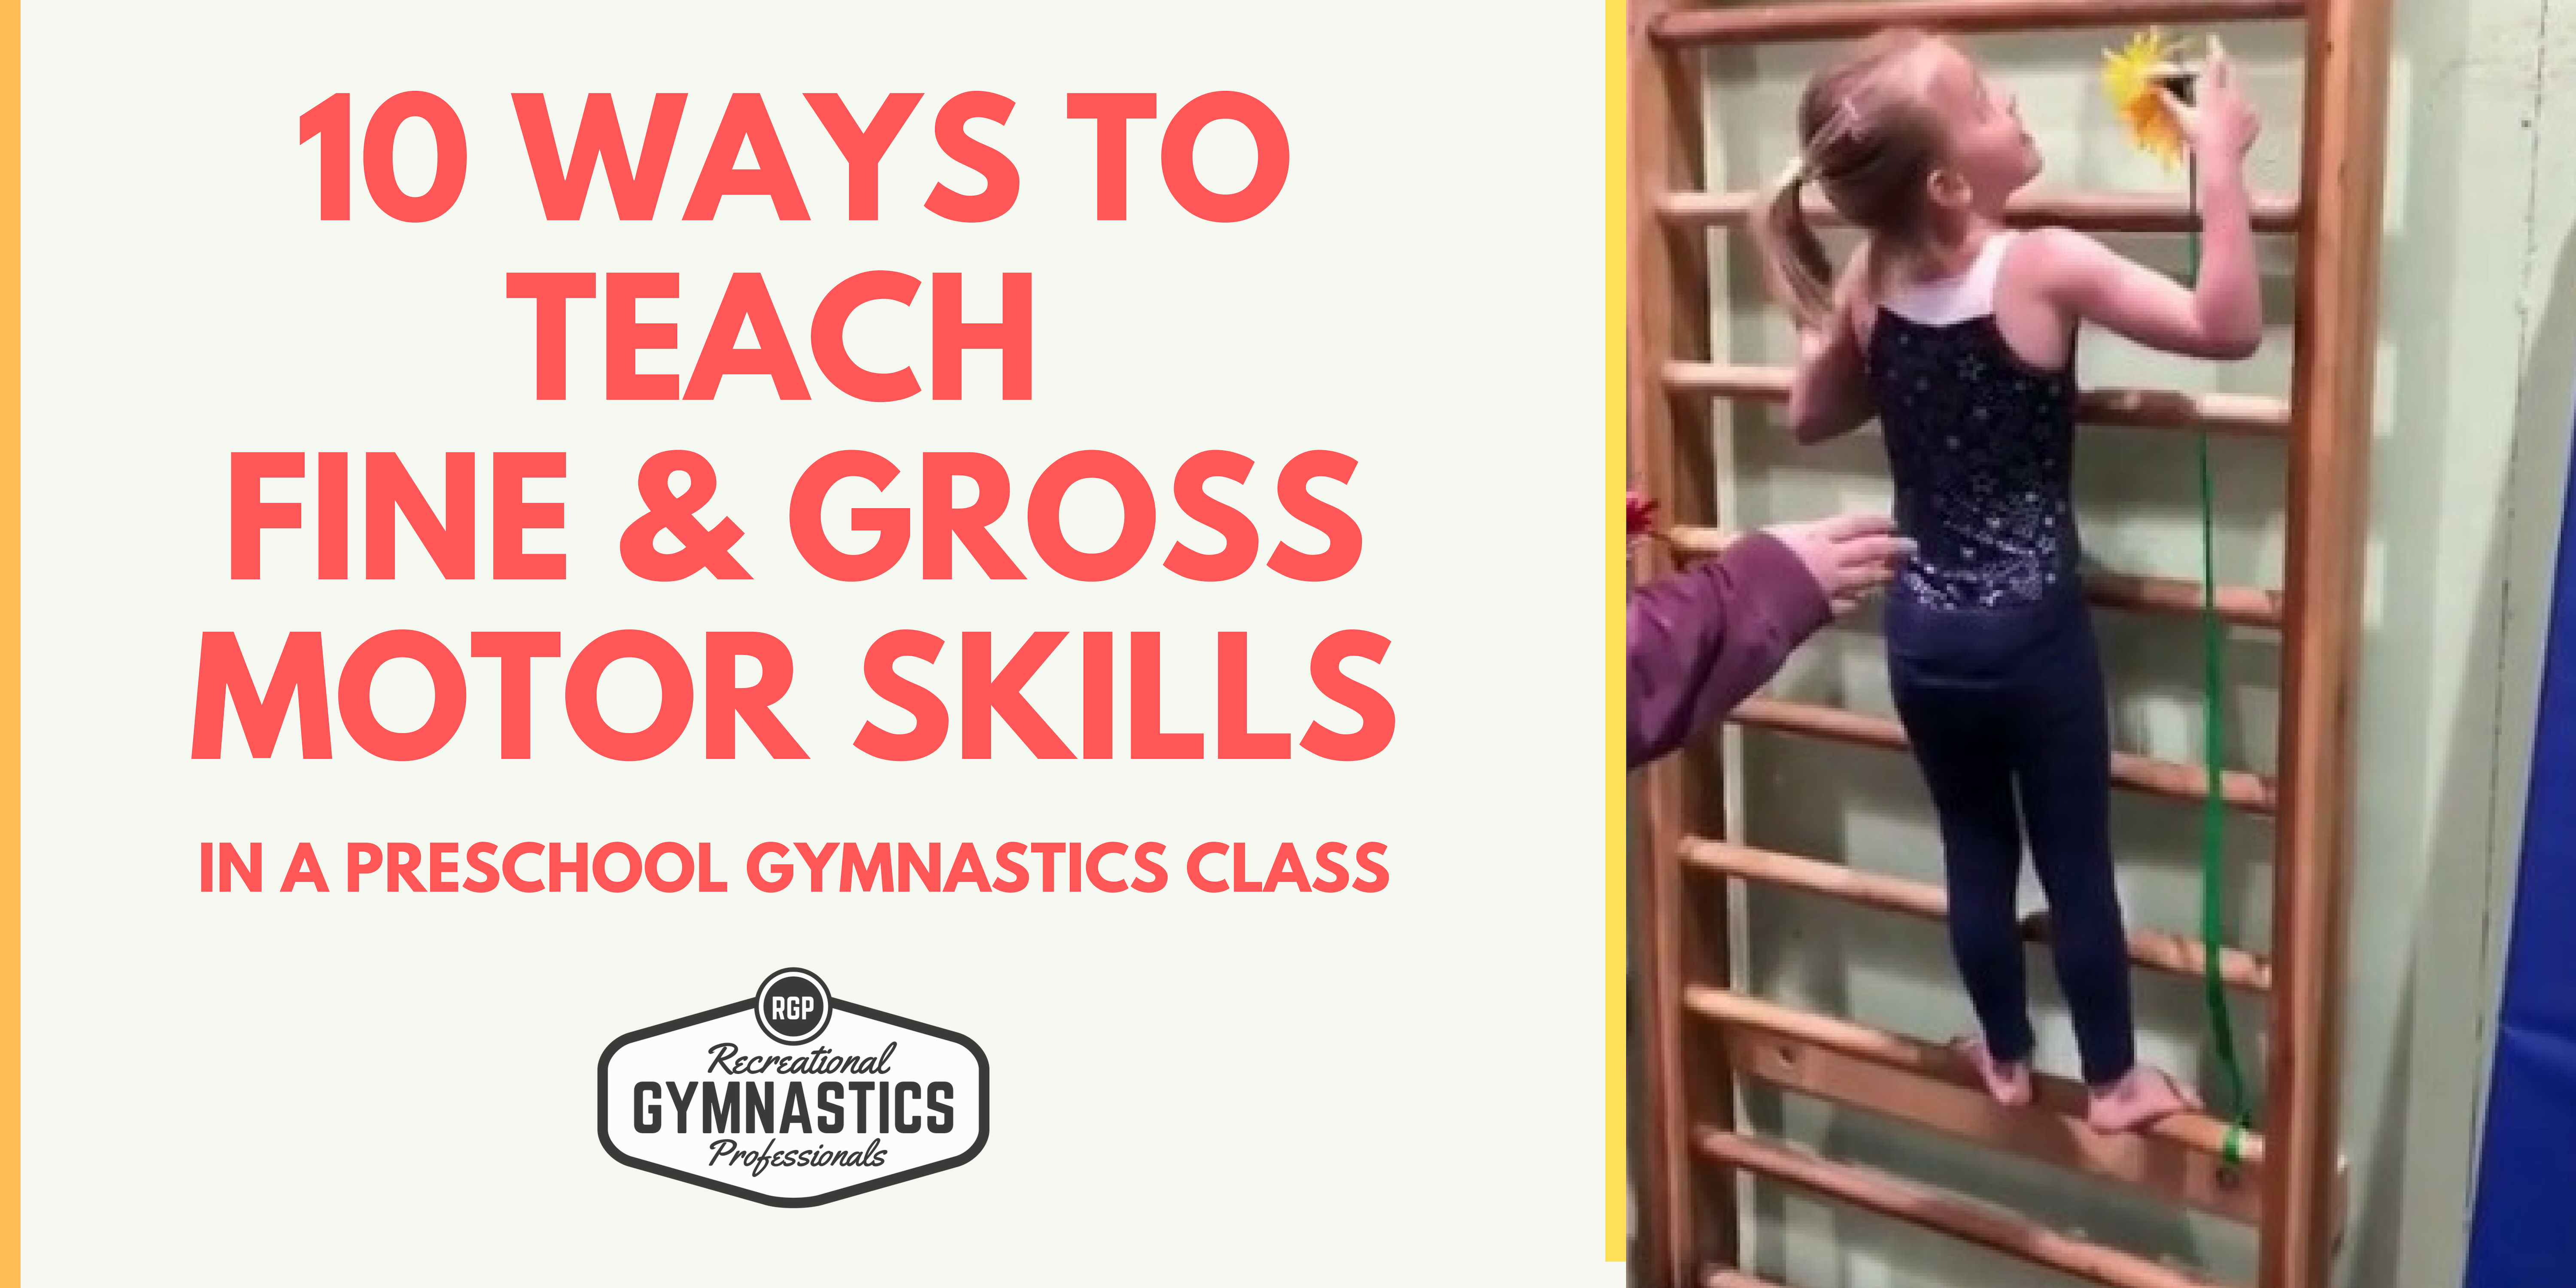 10 Ways to teach fine & gross motor skills in a preschool gymnastics class || www.recgympros.com || @recgympros || #recgympros